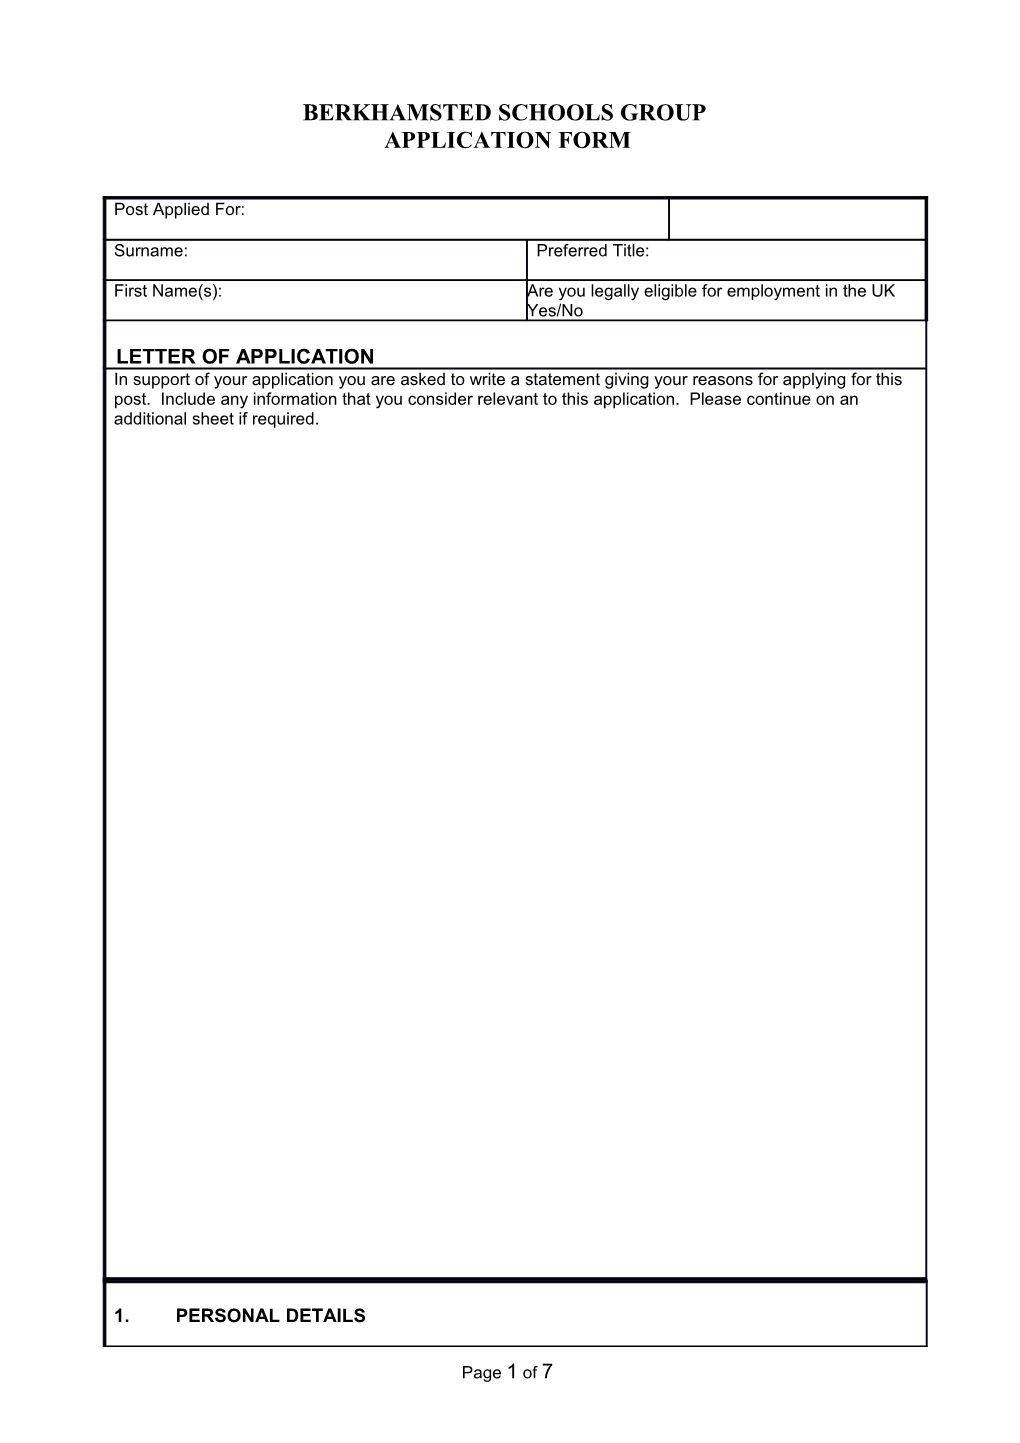 Berkhamsted Application Form